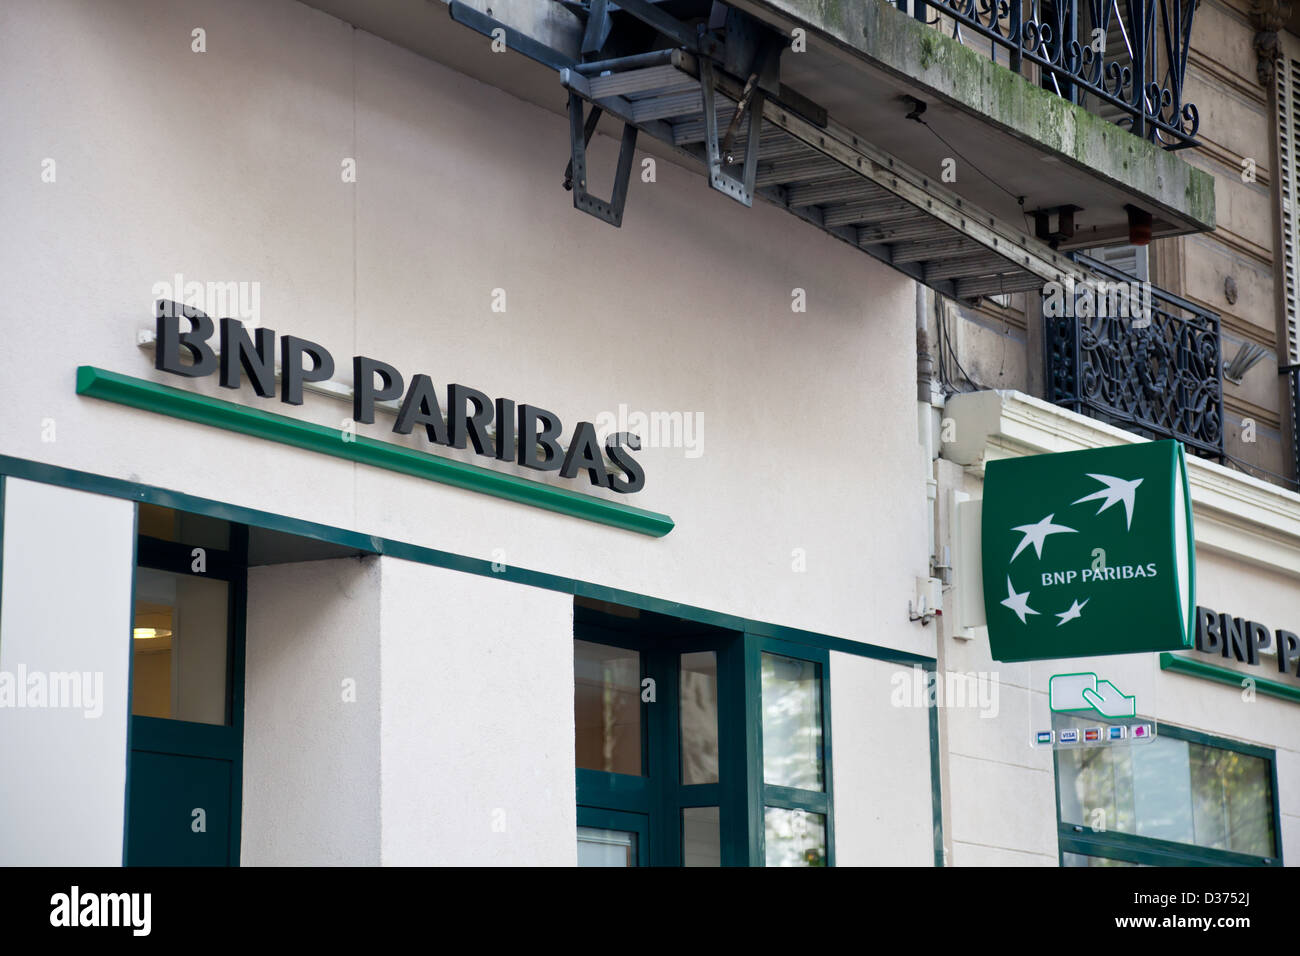 Bnp paribas paris hi-res stock photography and images - Alamy